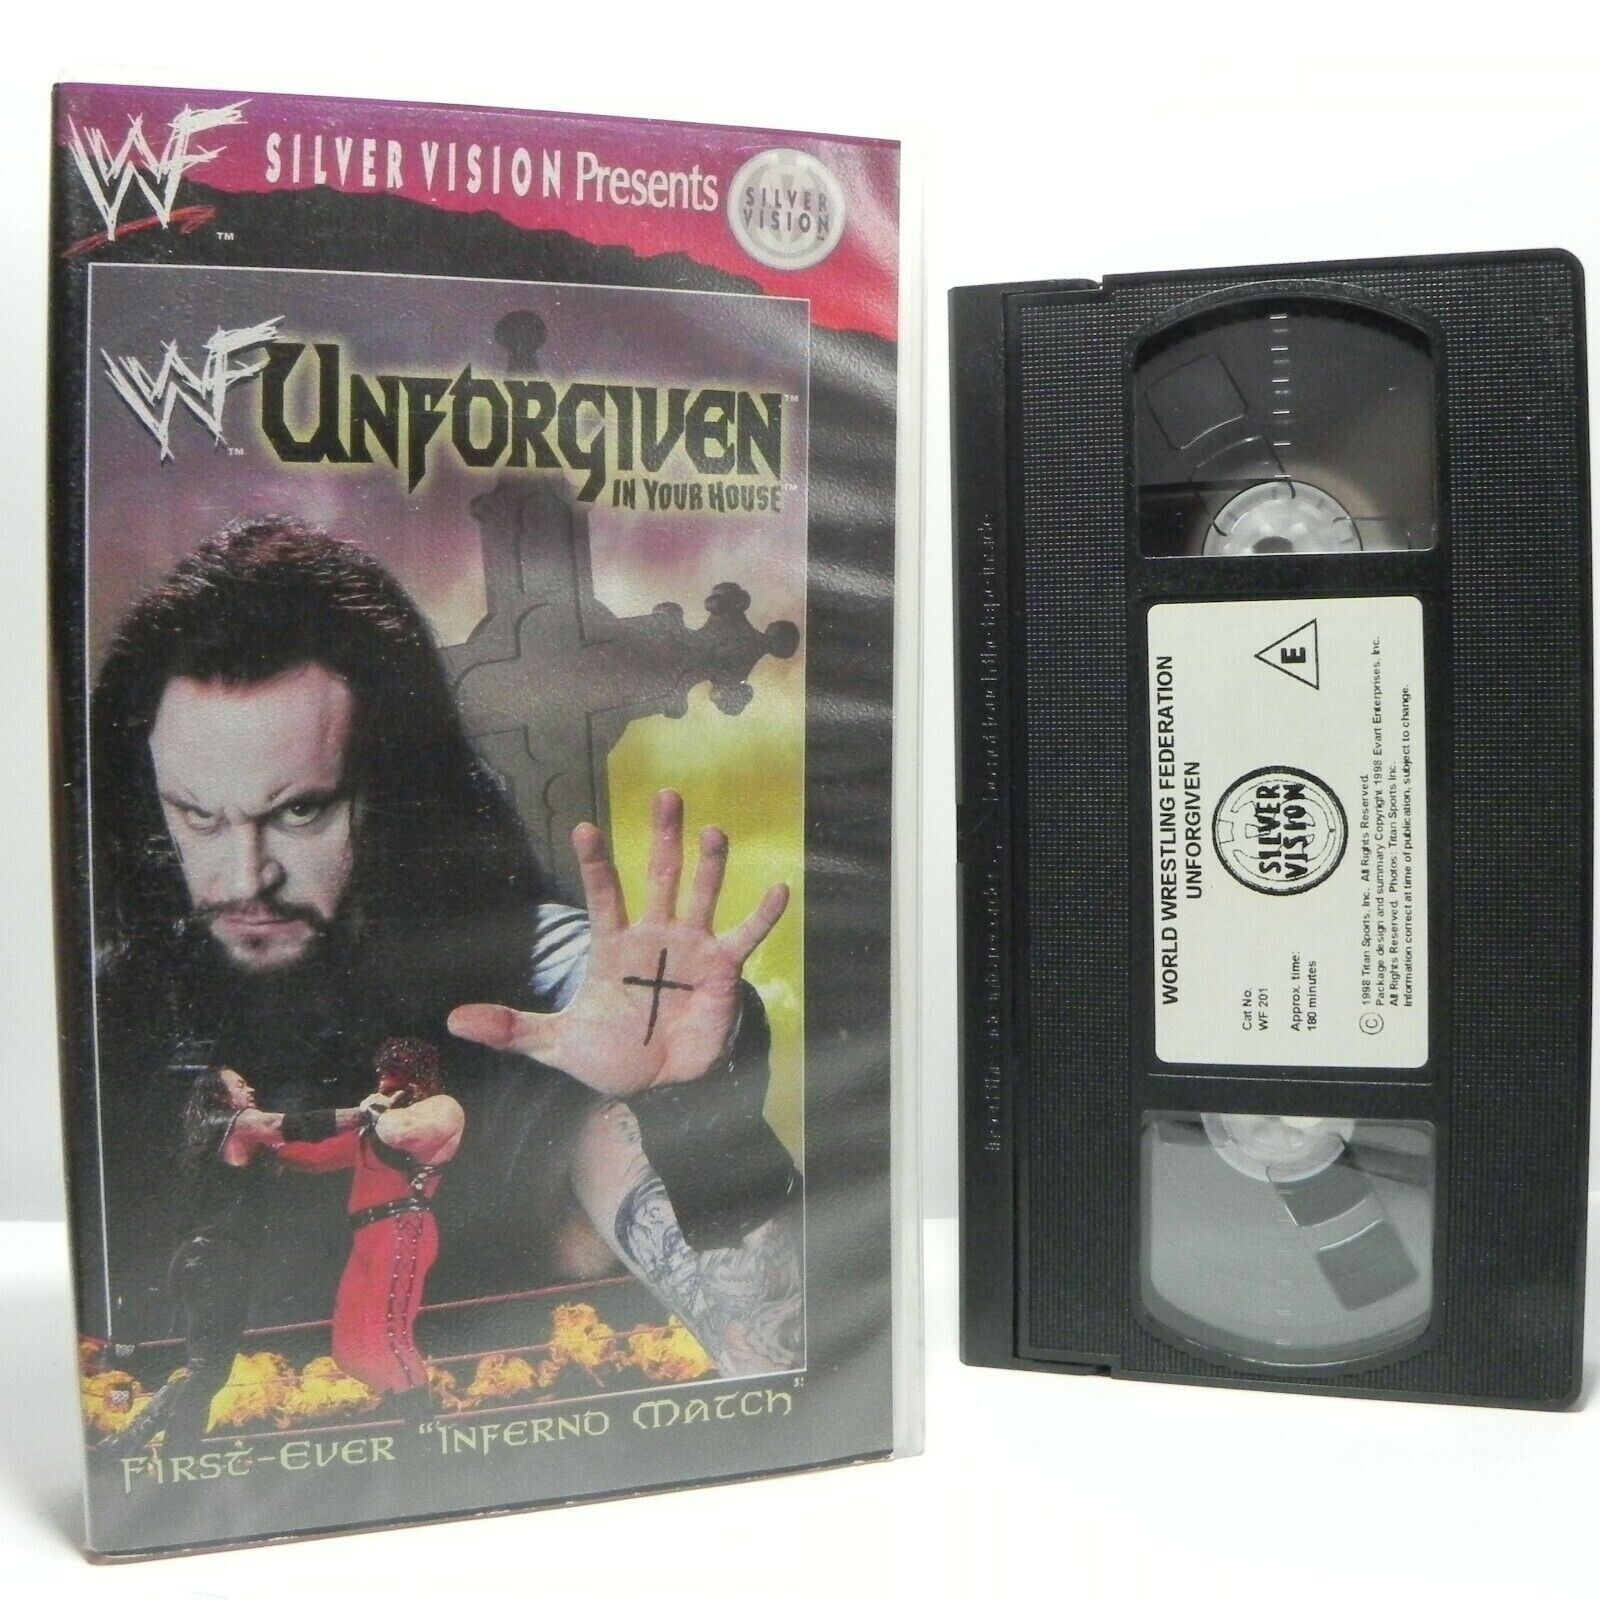 WWF Unforgiven: In Your House - Wrestling - S.Austin - O.Hart - K.Shamrock - VHS-